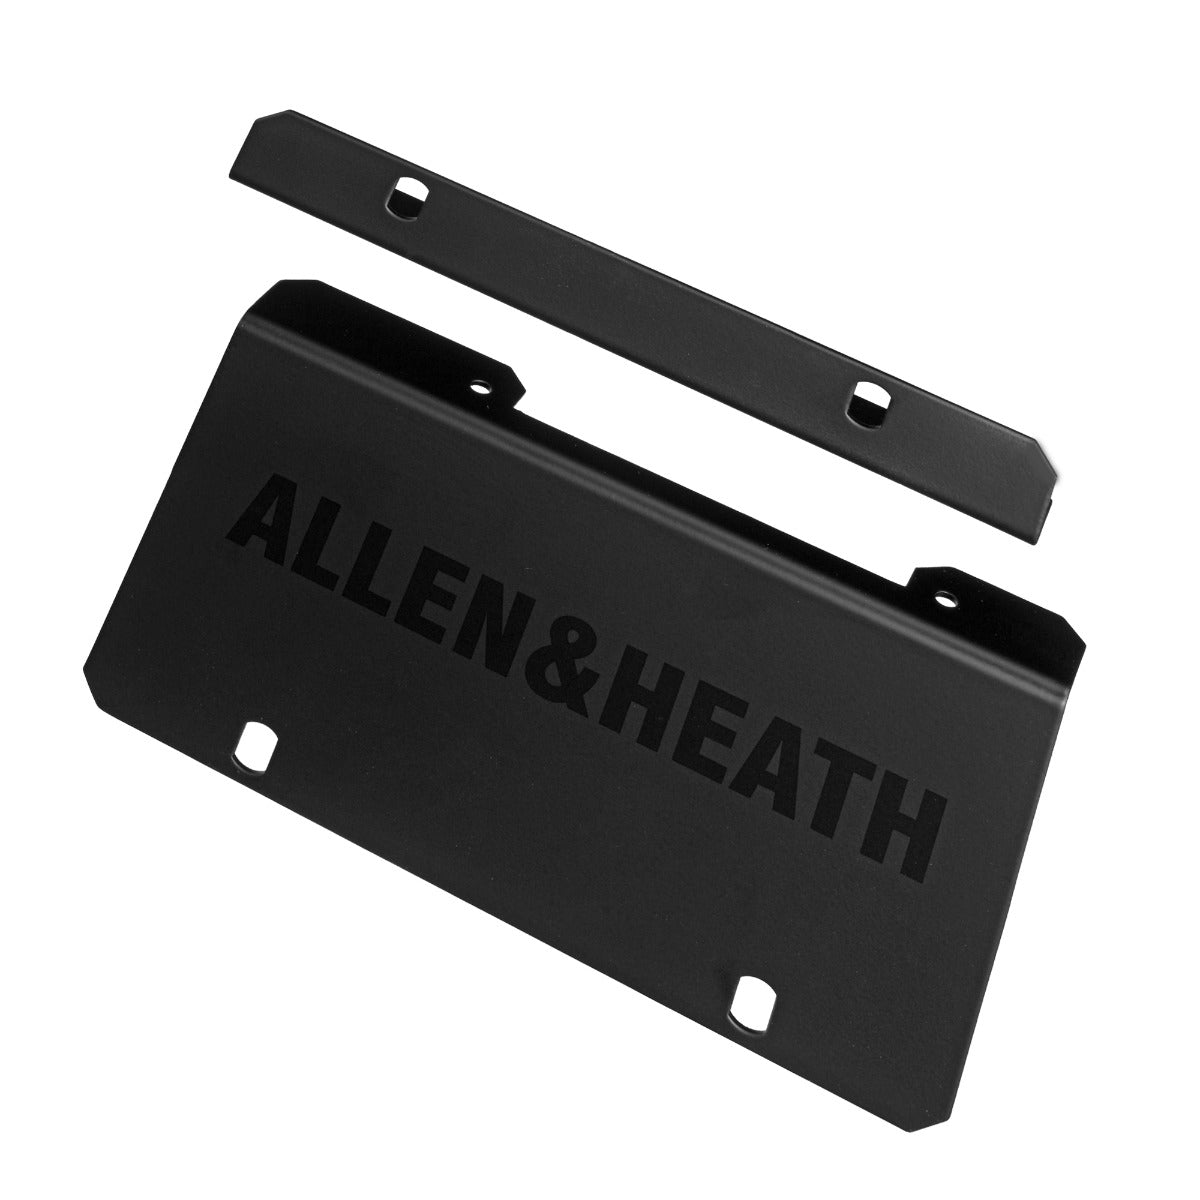 Allen & Heath AB168-RK10 Rackmount Kit for AB168 AudioRack 